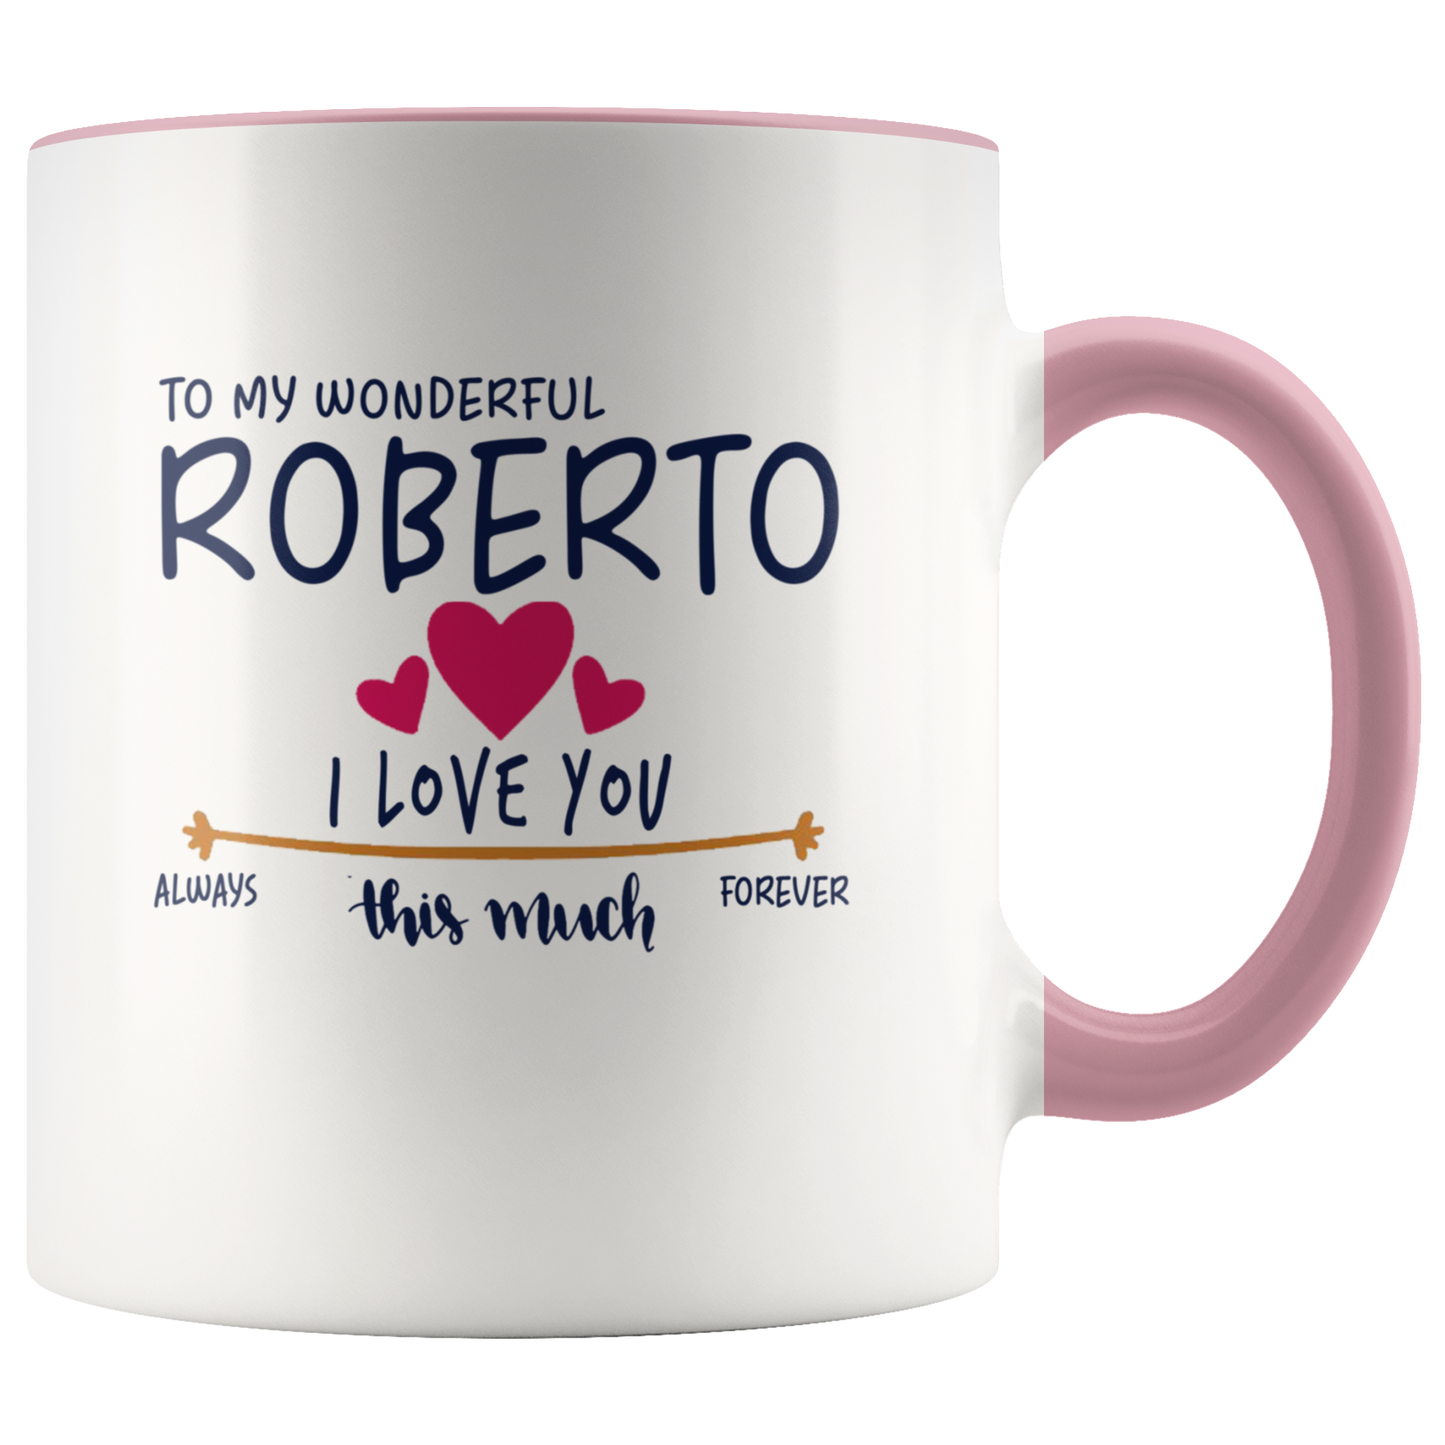 M-21260662-sp-22759 - Valentines Day Coffee Mug With Name Roberto - To My Wonderfu